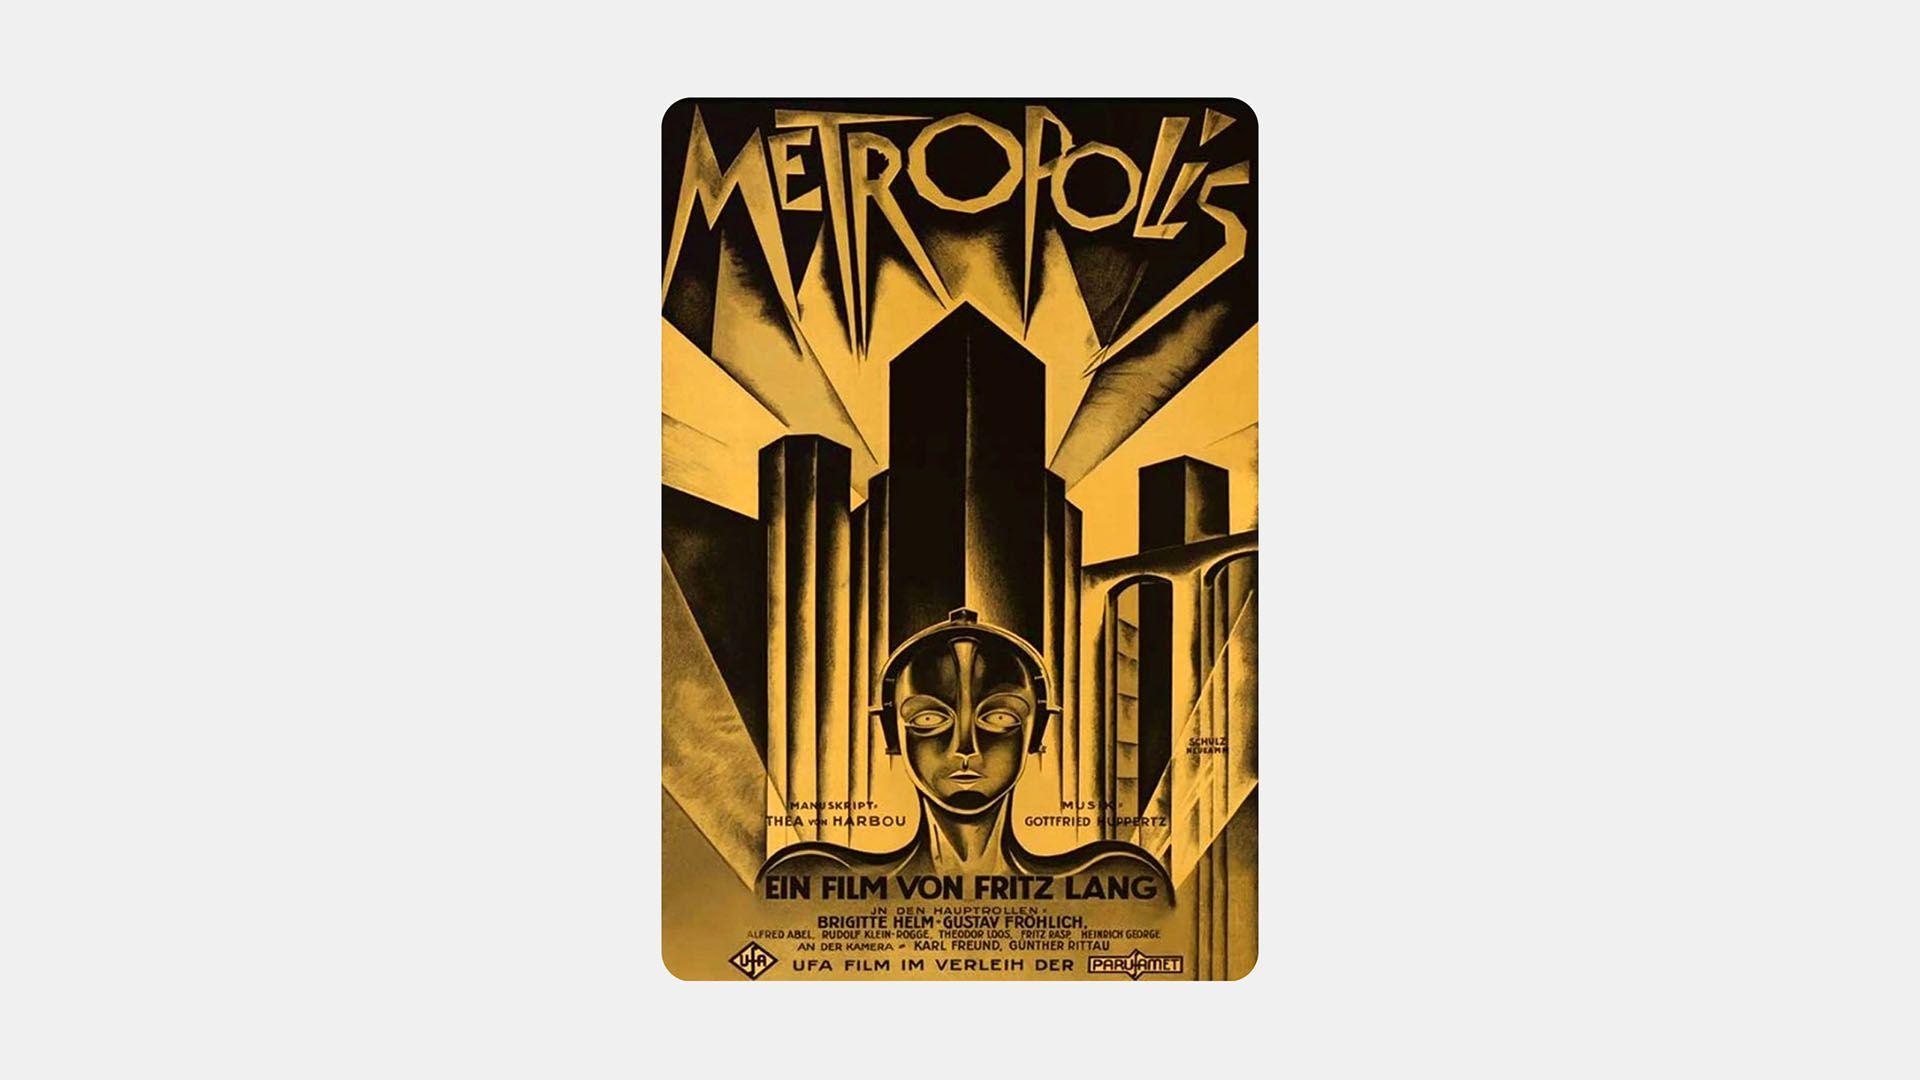 Mrtropolis movie poster